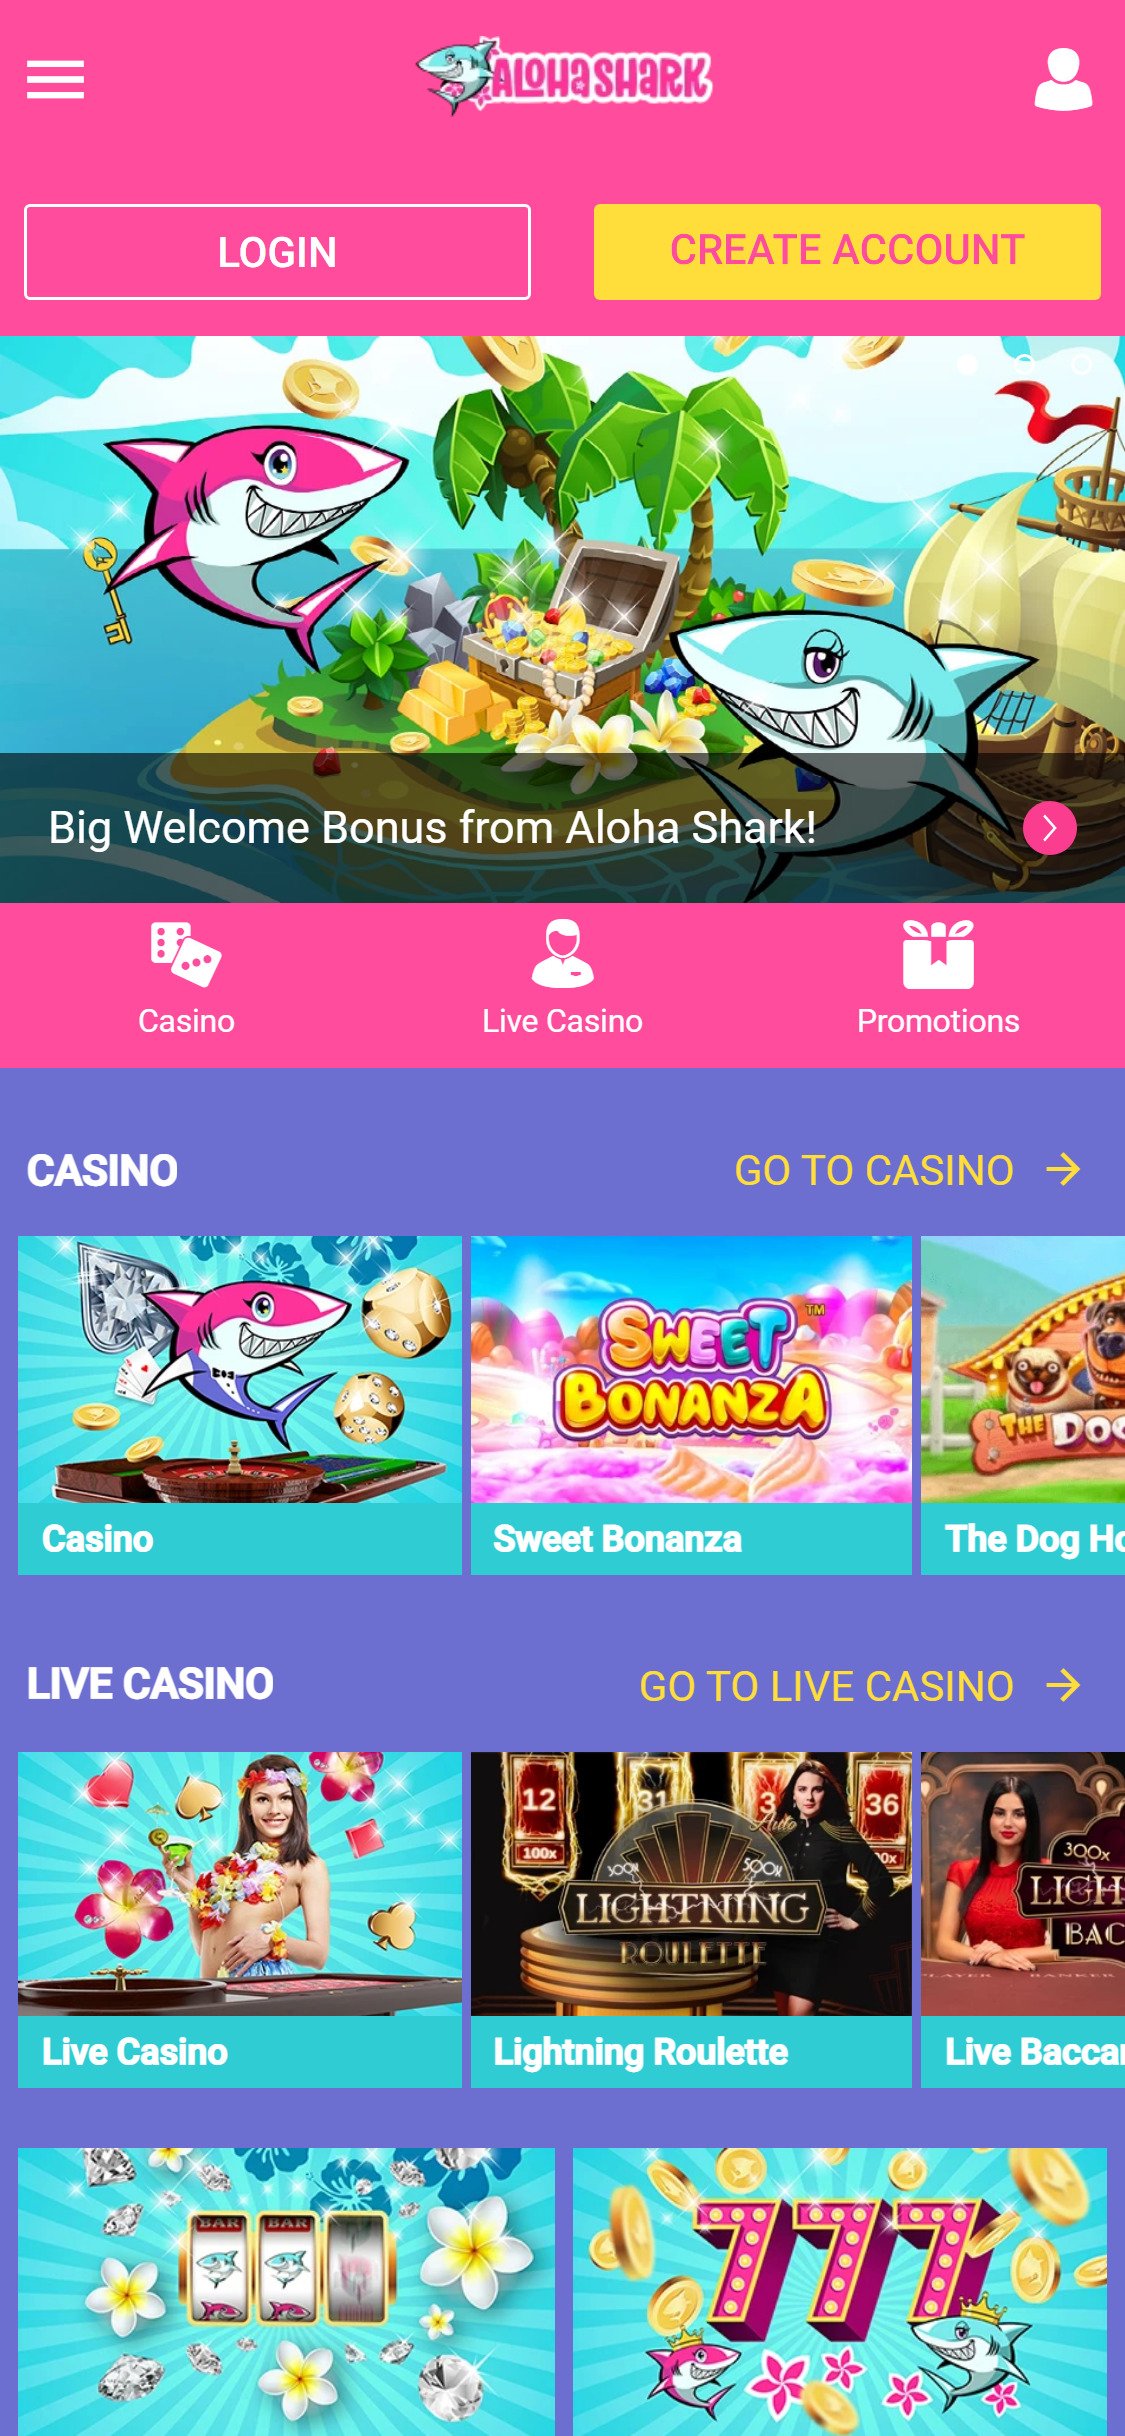 Aloha Shark Casino Mobile Review